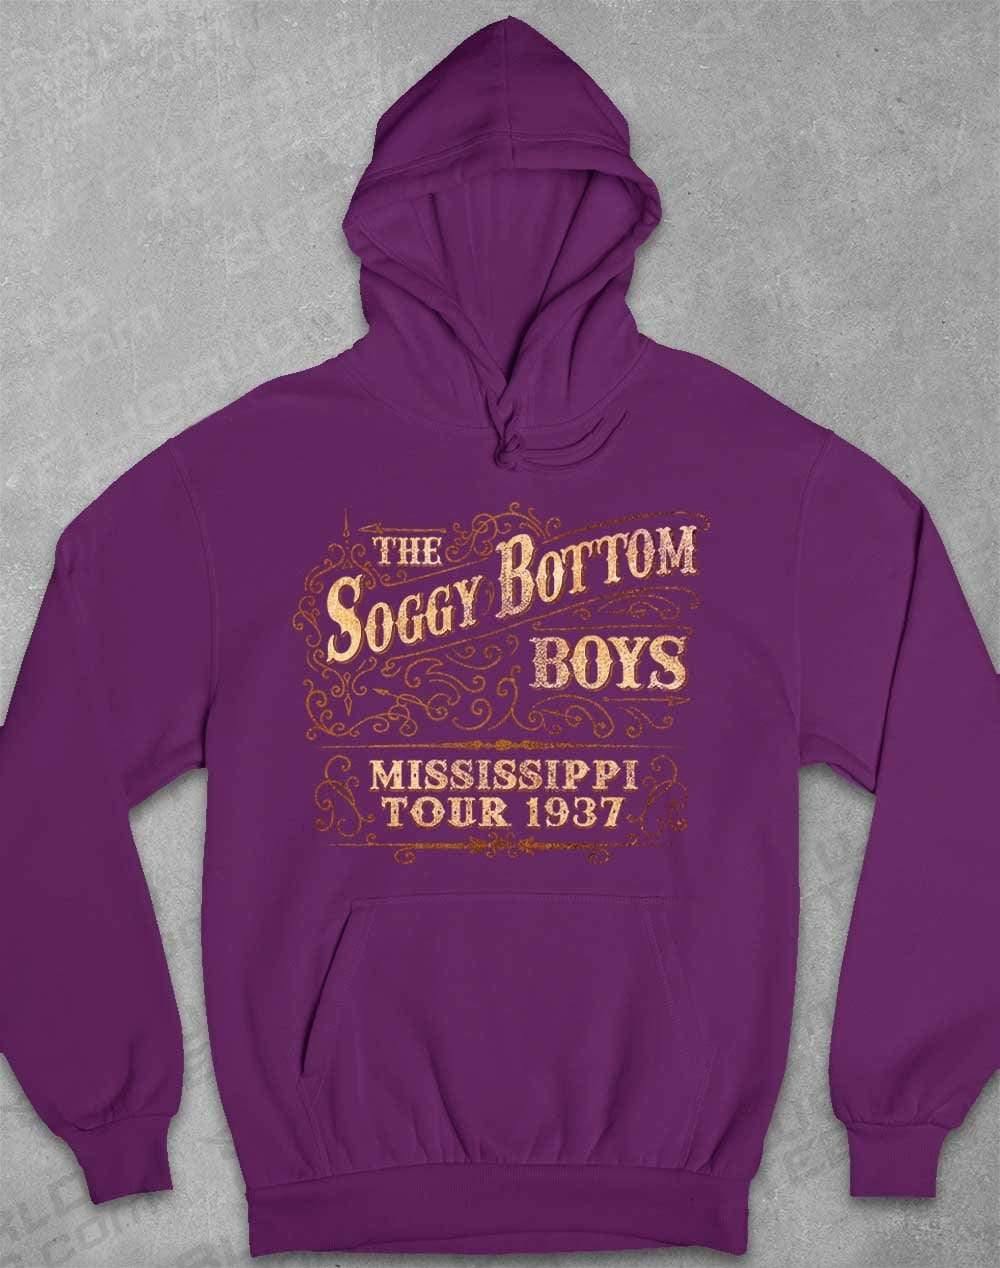 Soggy Bottom Boys Tour 1937 Hoodie XS / Plum  - Off World Tees